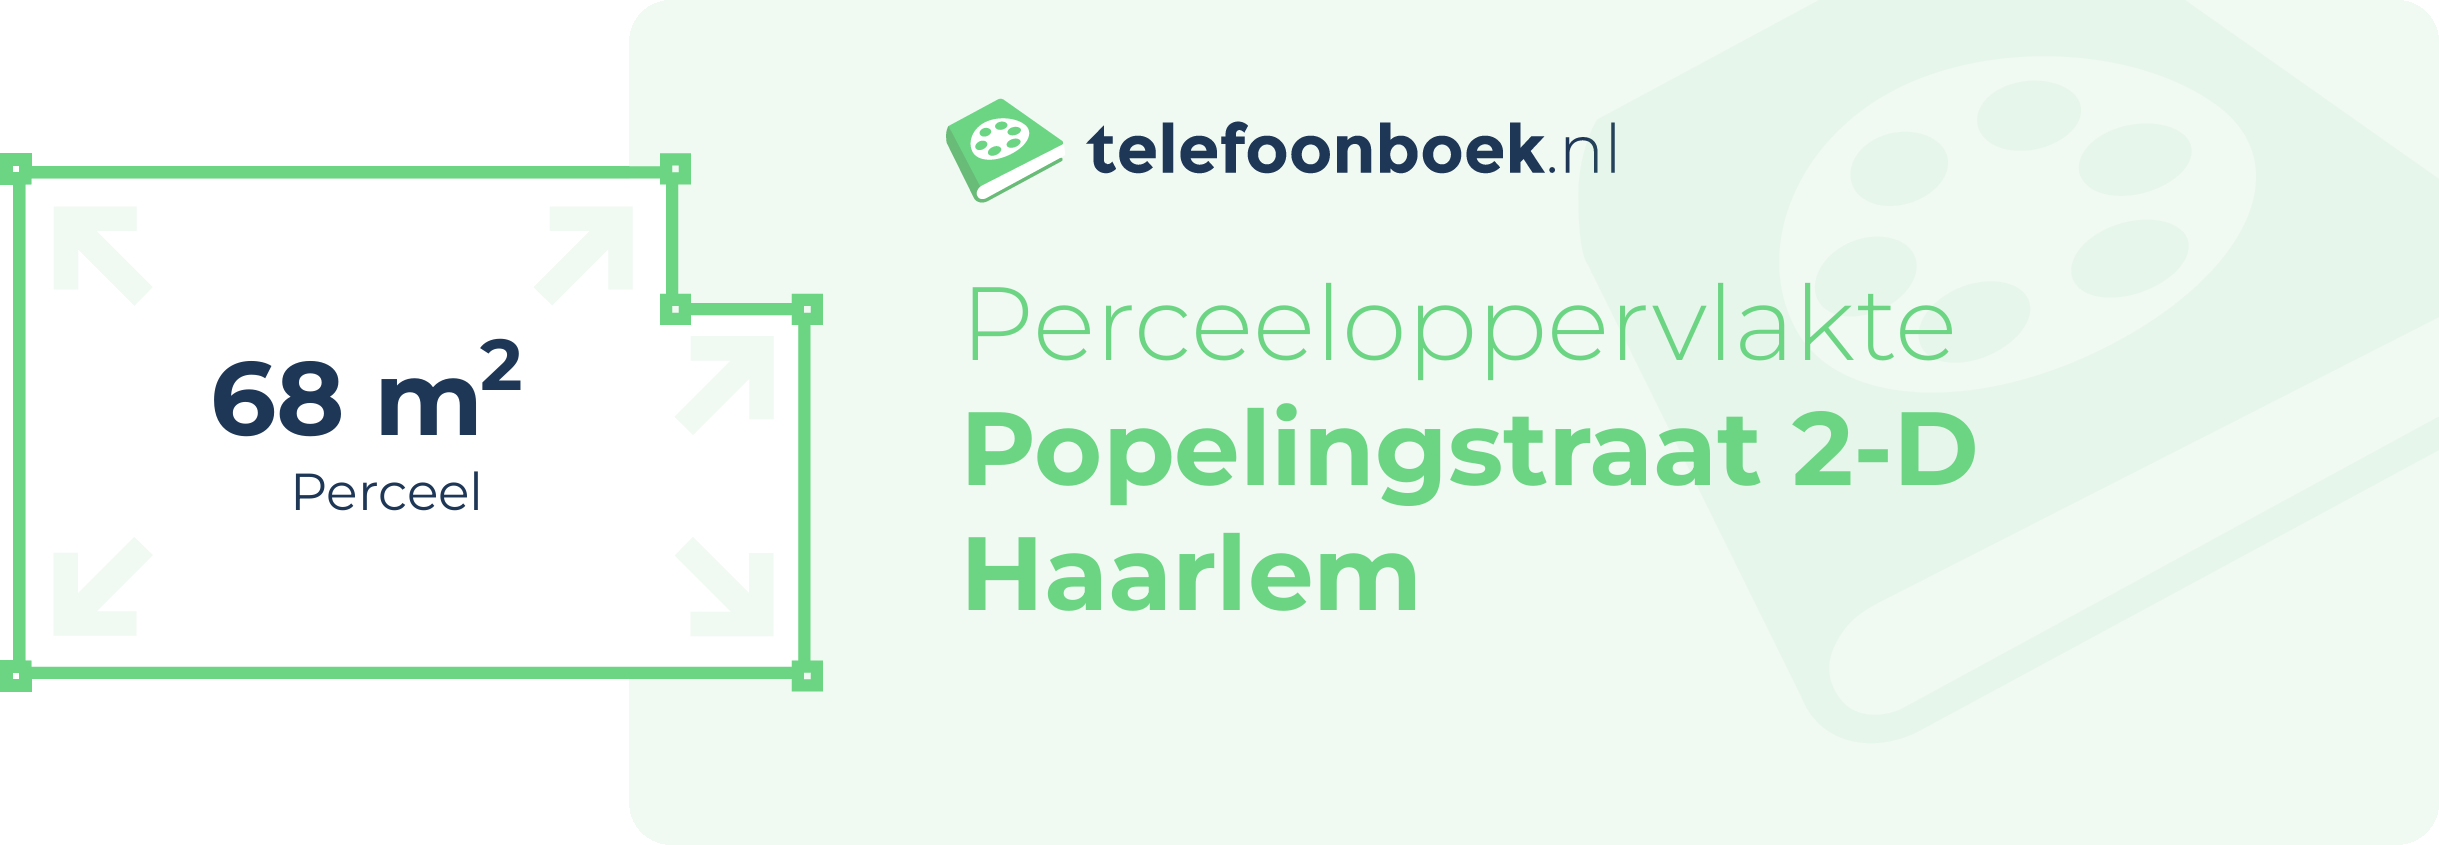 Perceeloppervlakte Popelingstraat 2-D Haarlem